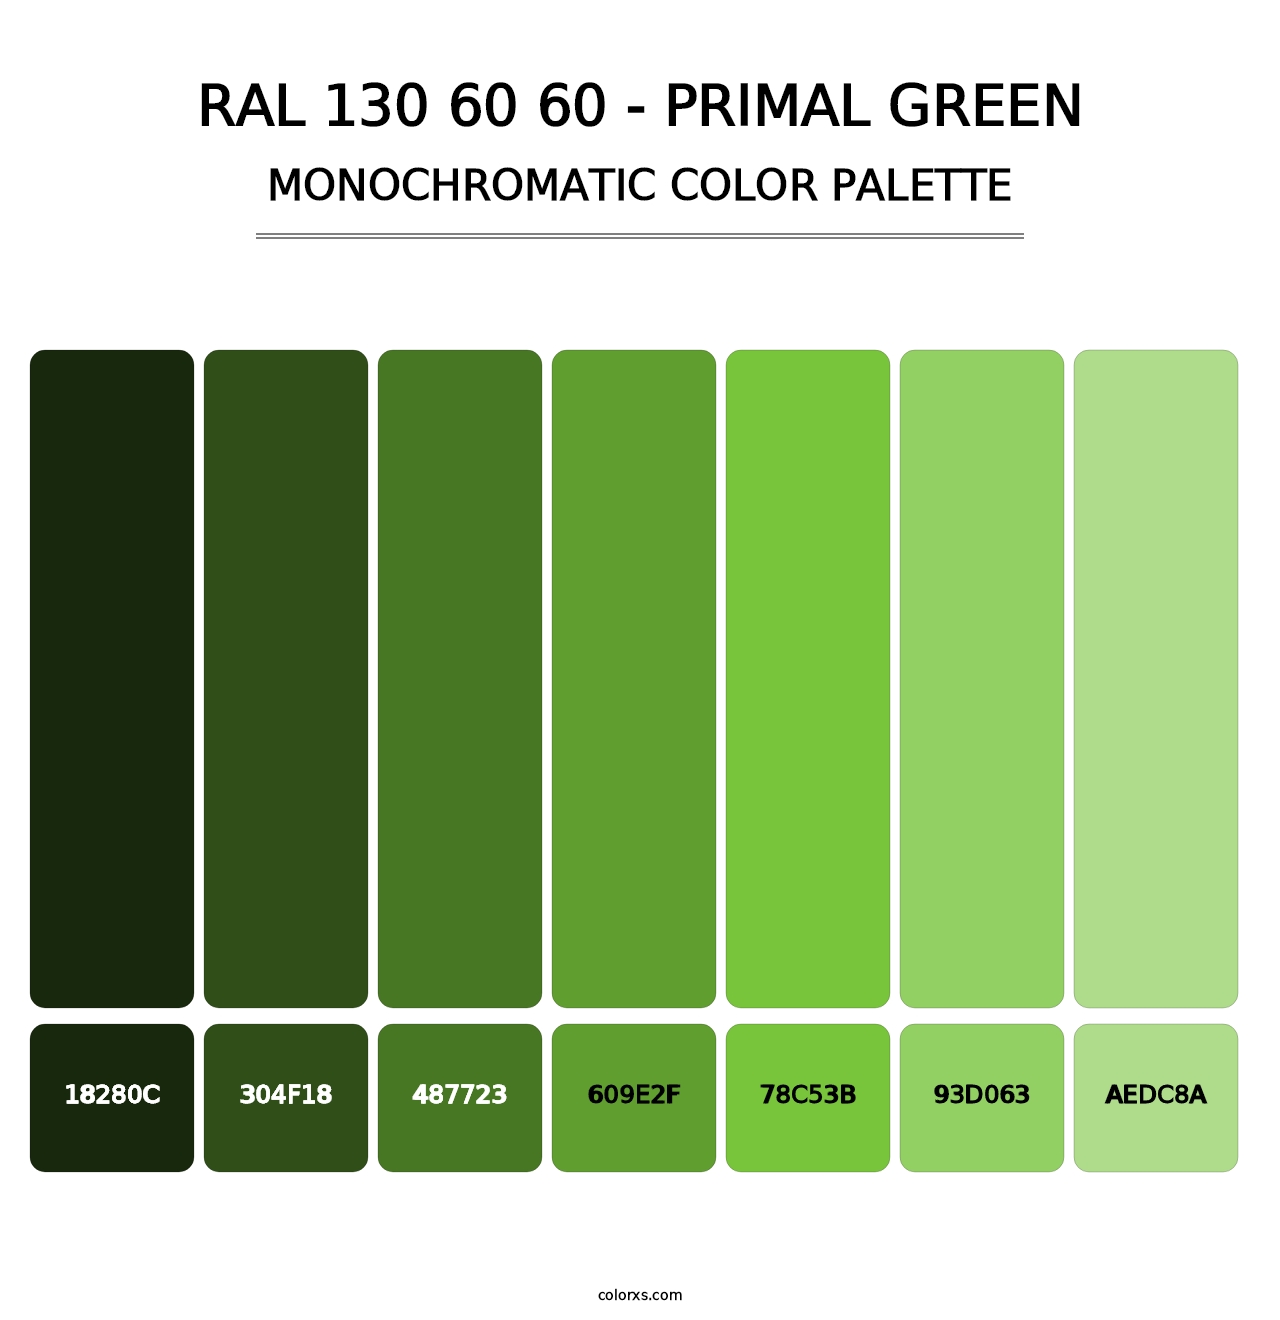 RAL 130 60 60 - Primal Green - Monochromatic Color Palette